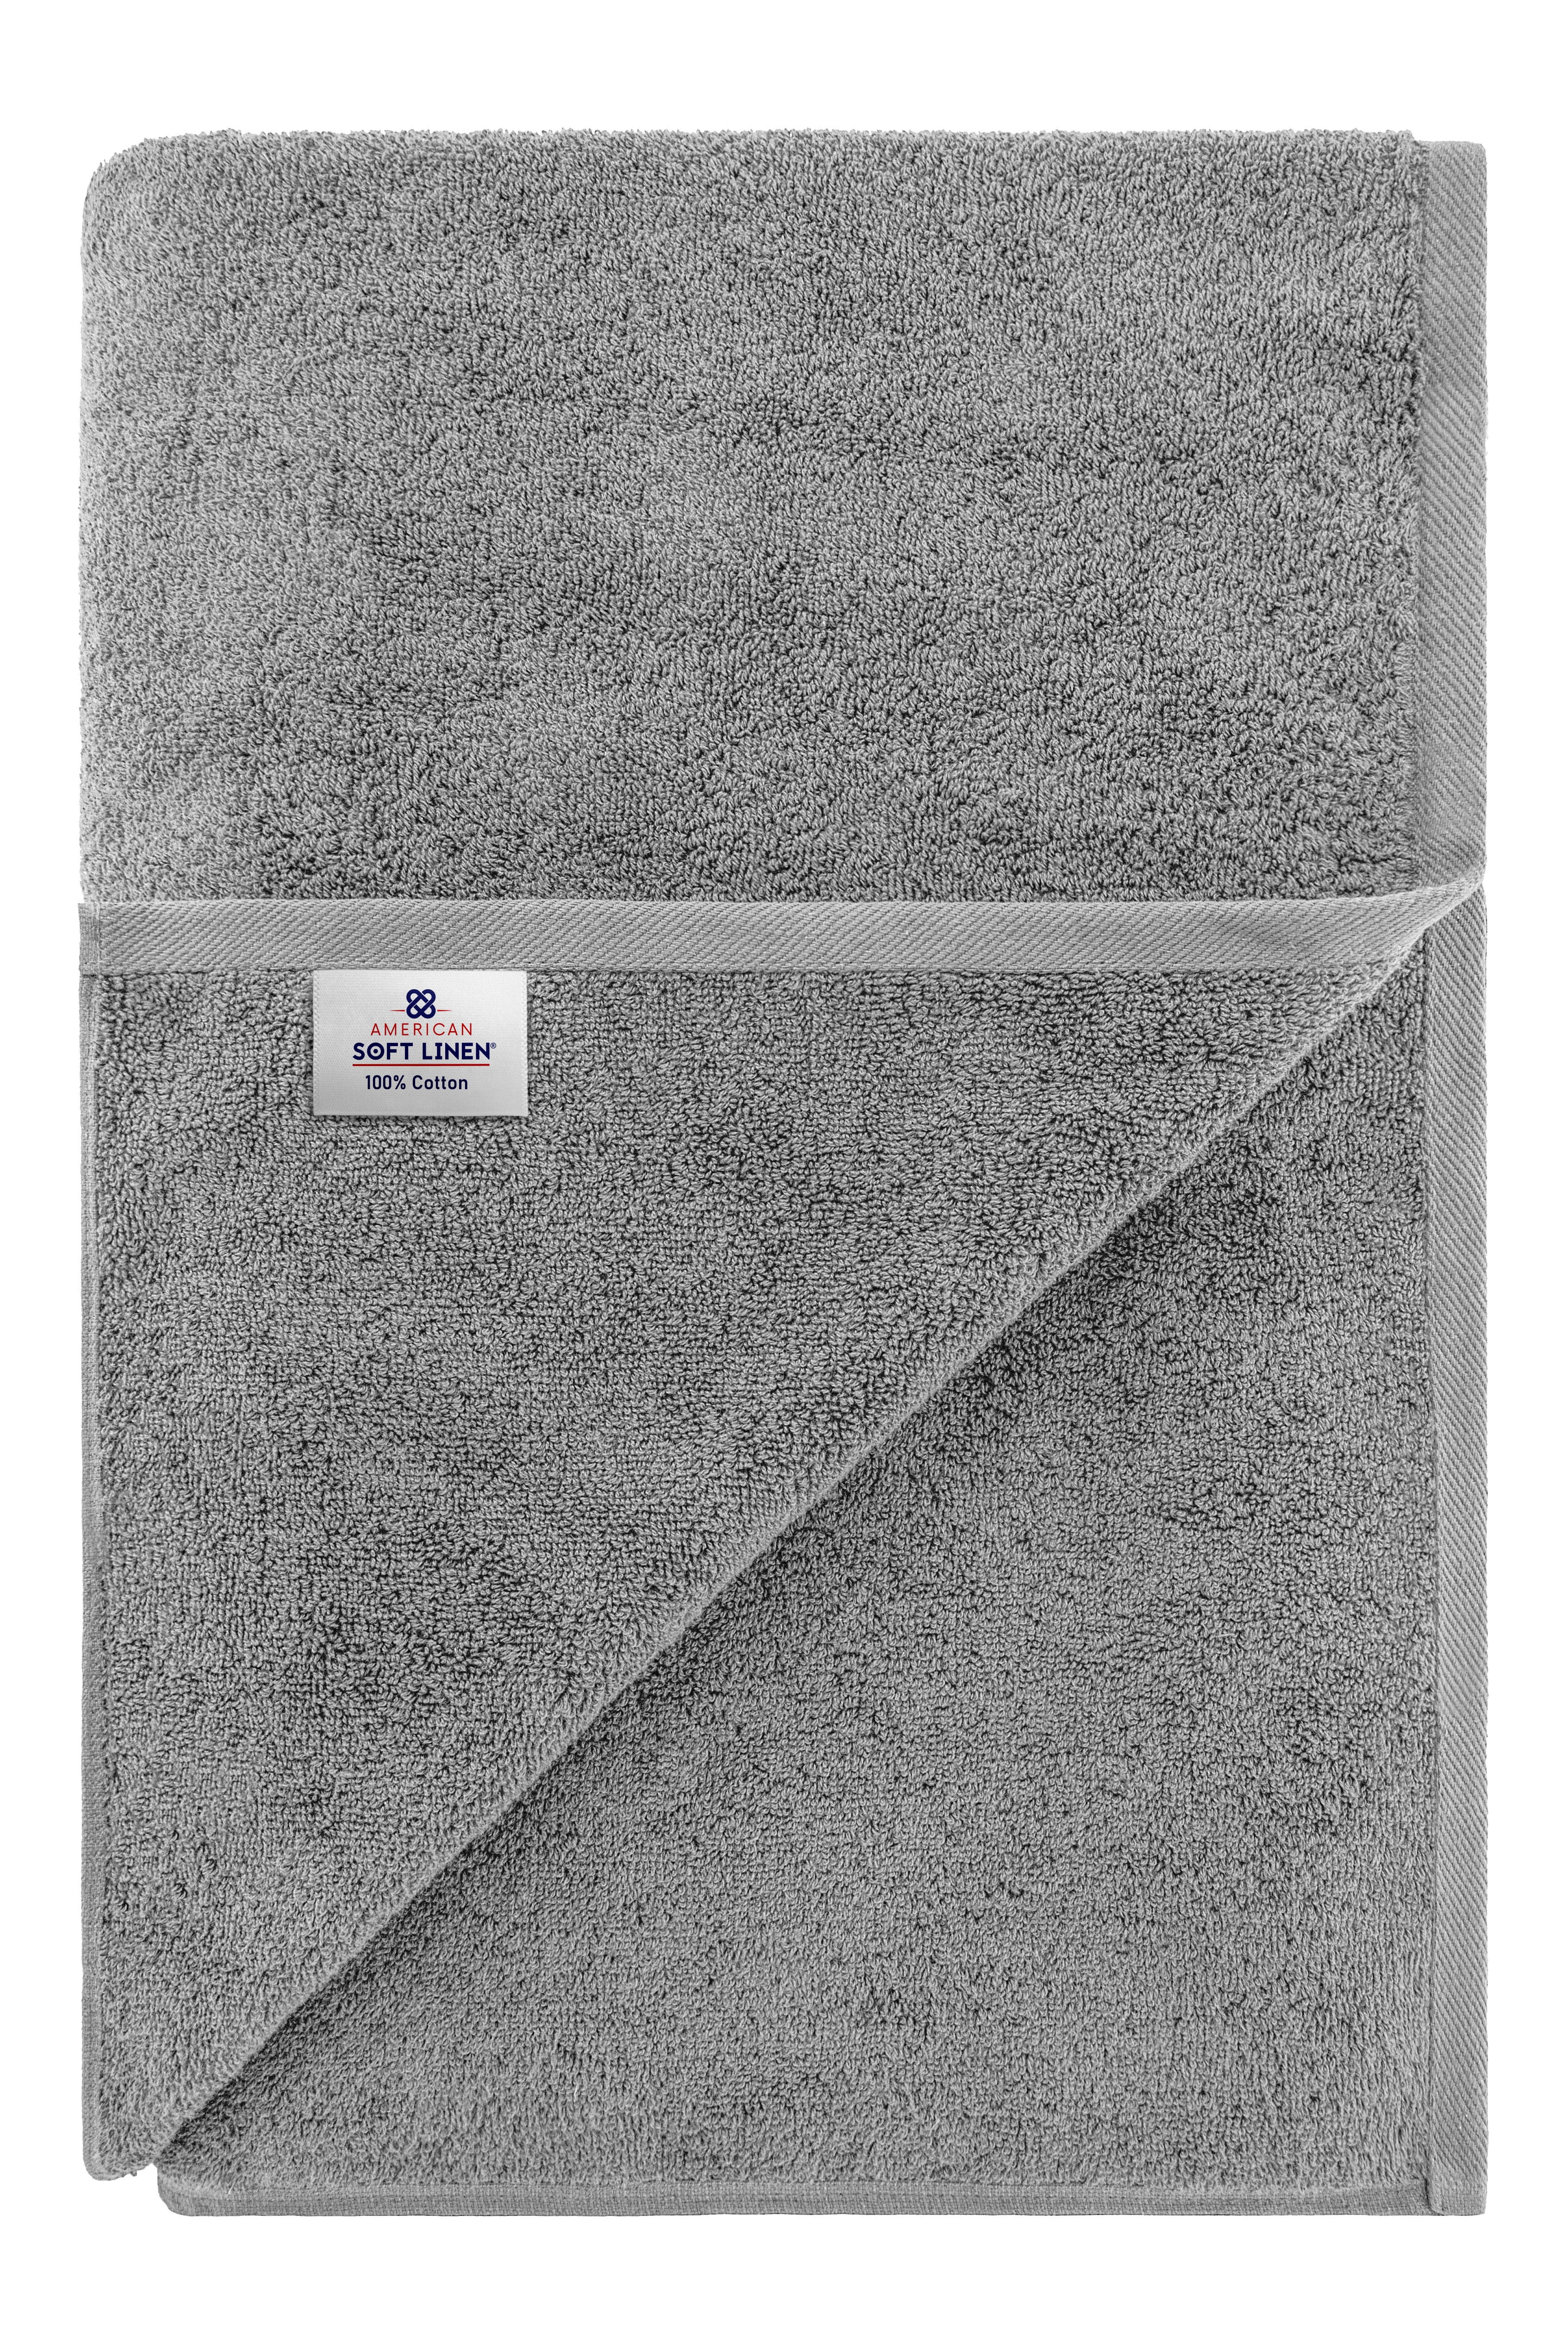 Cotton Paradise Oversized Bath Sheet, 100% Cotton 40x80 Clearance Jumbo  Large Bath Towel for Bathroom, Dark Gray